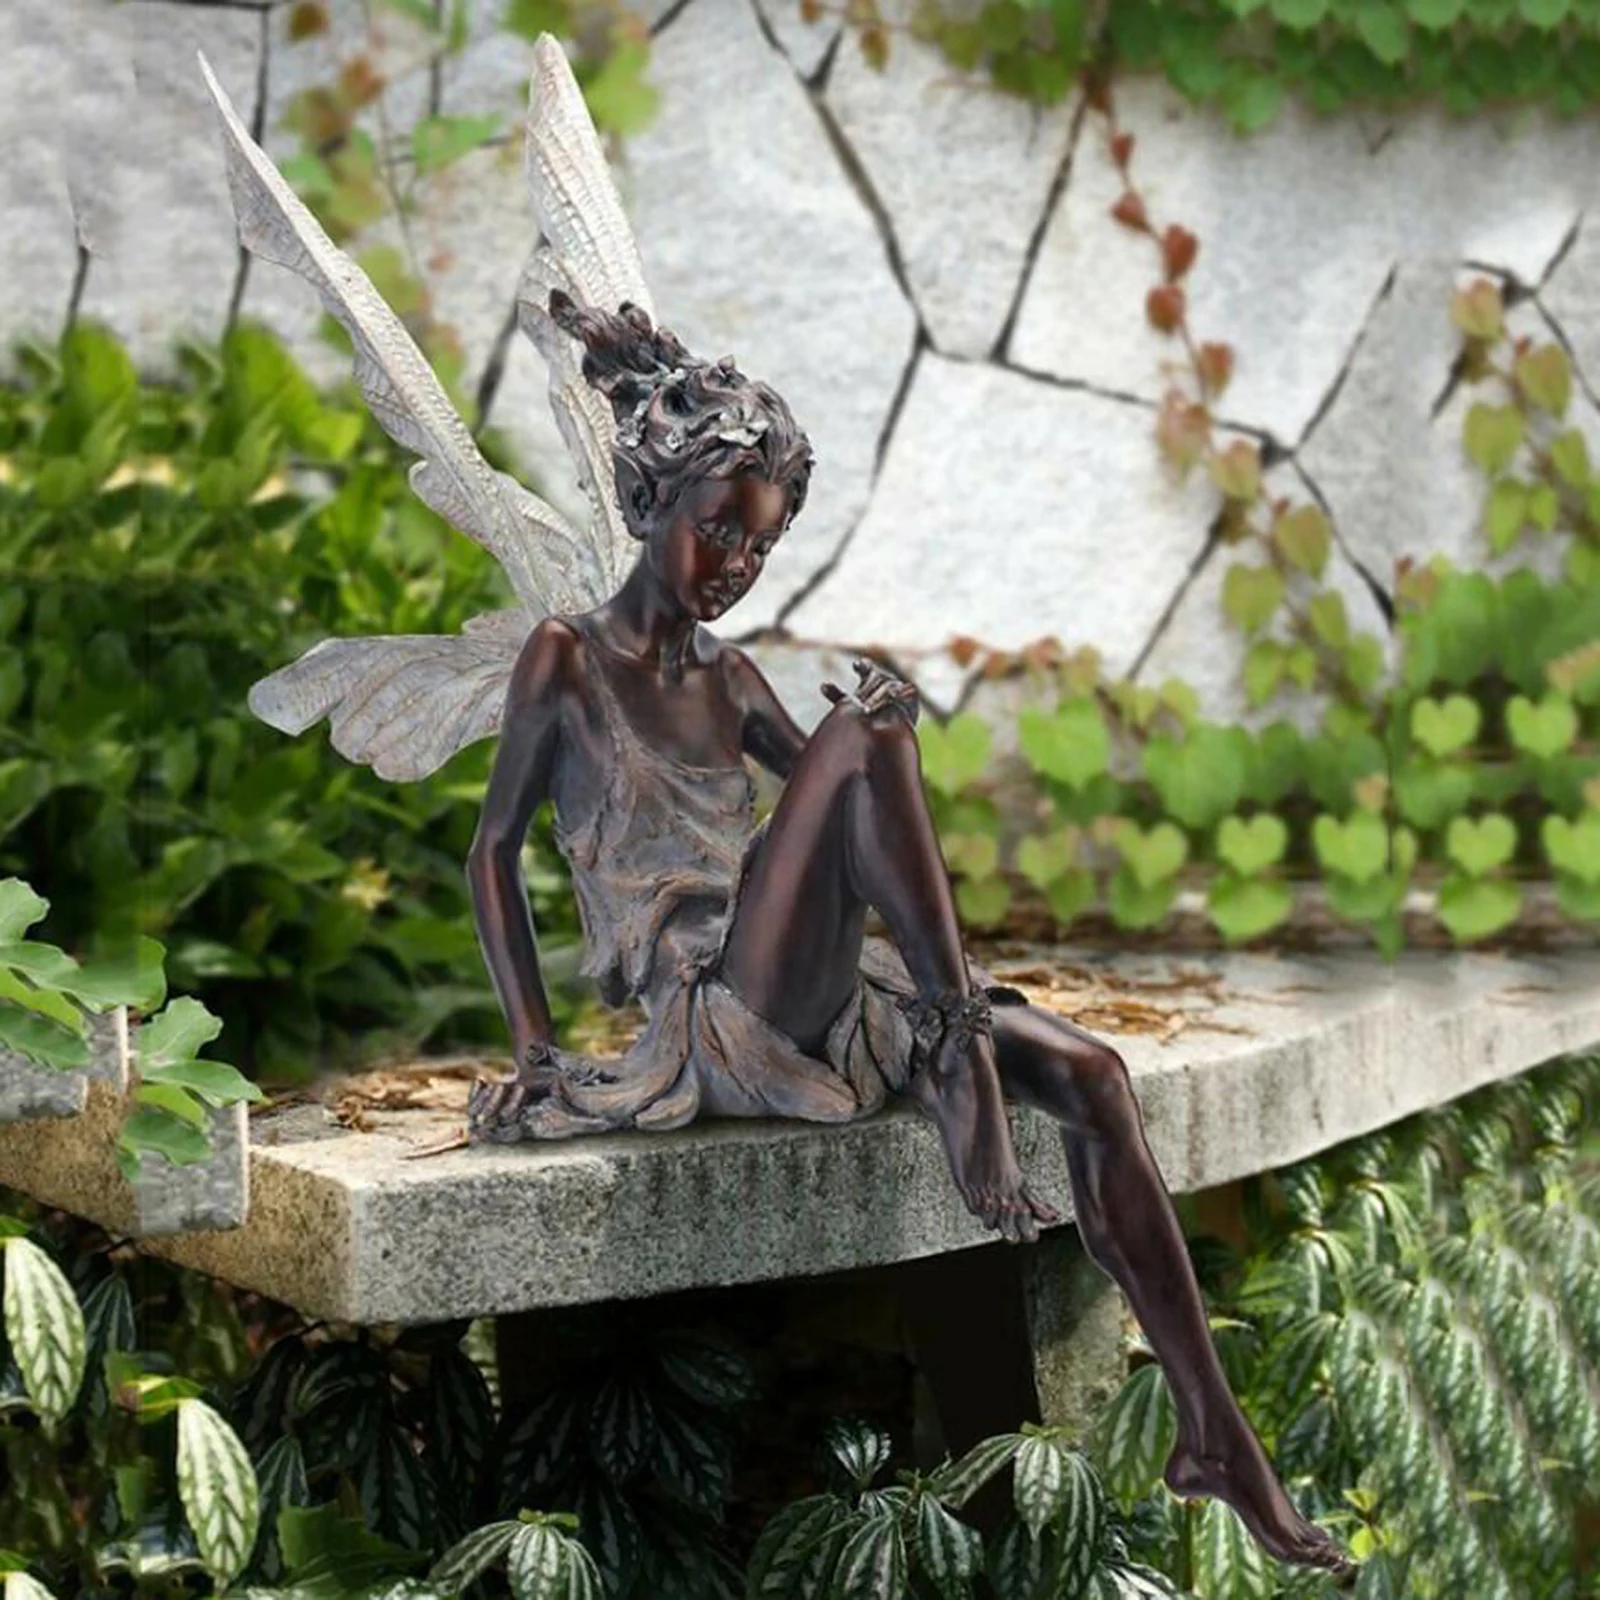 Resin Sitting Fairy Statue Garden Ornament Porch Sculpture Yard Craft Landscaping for Home Garden Decoration